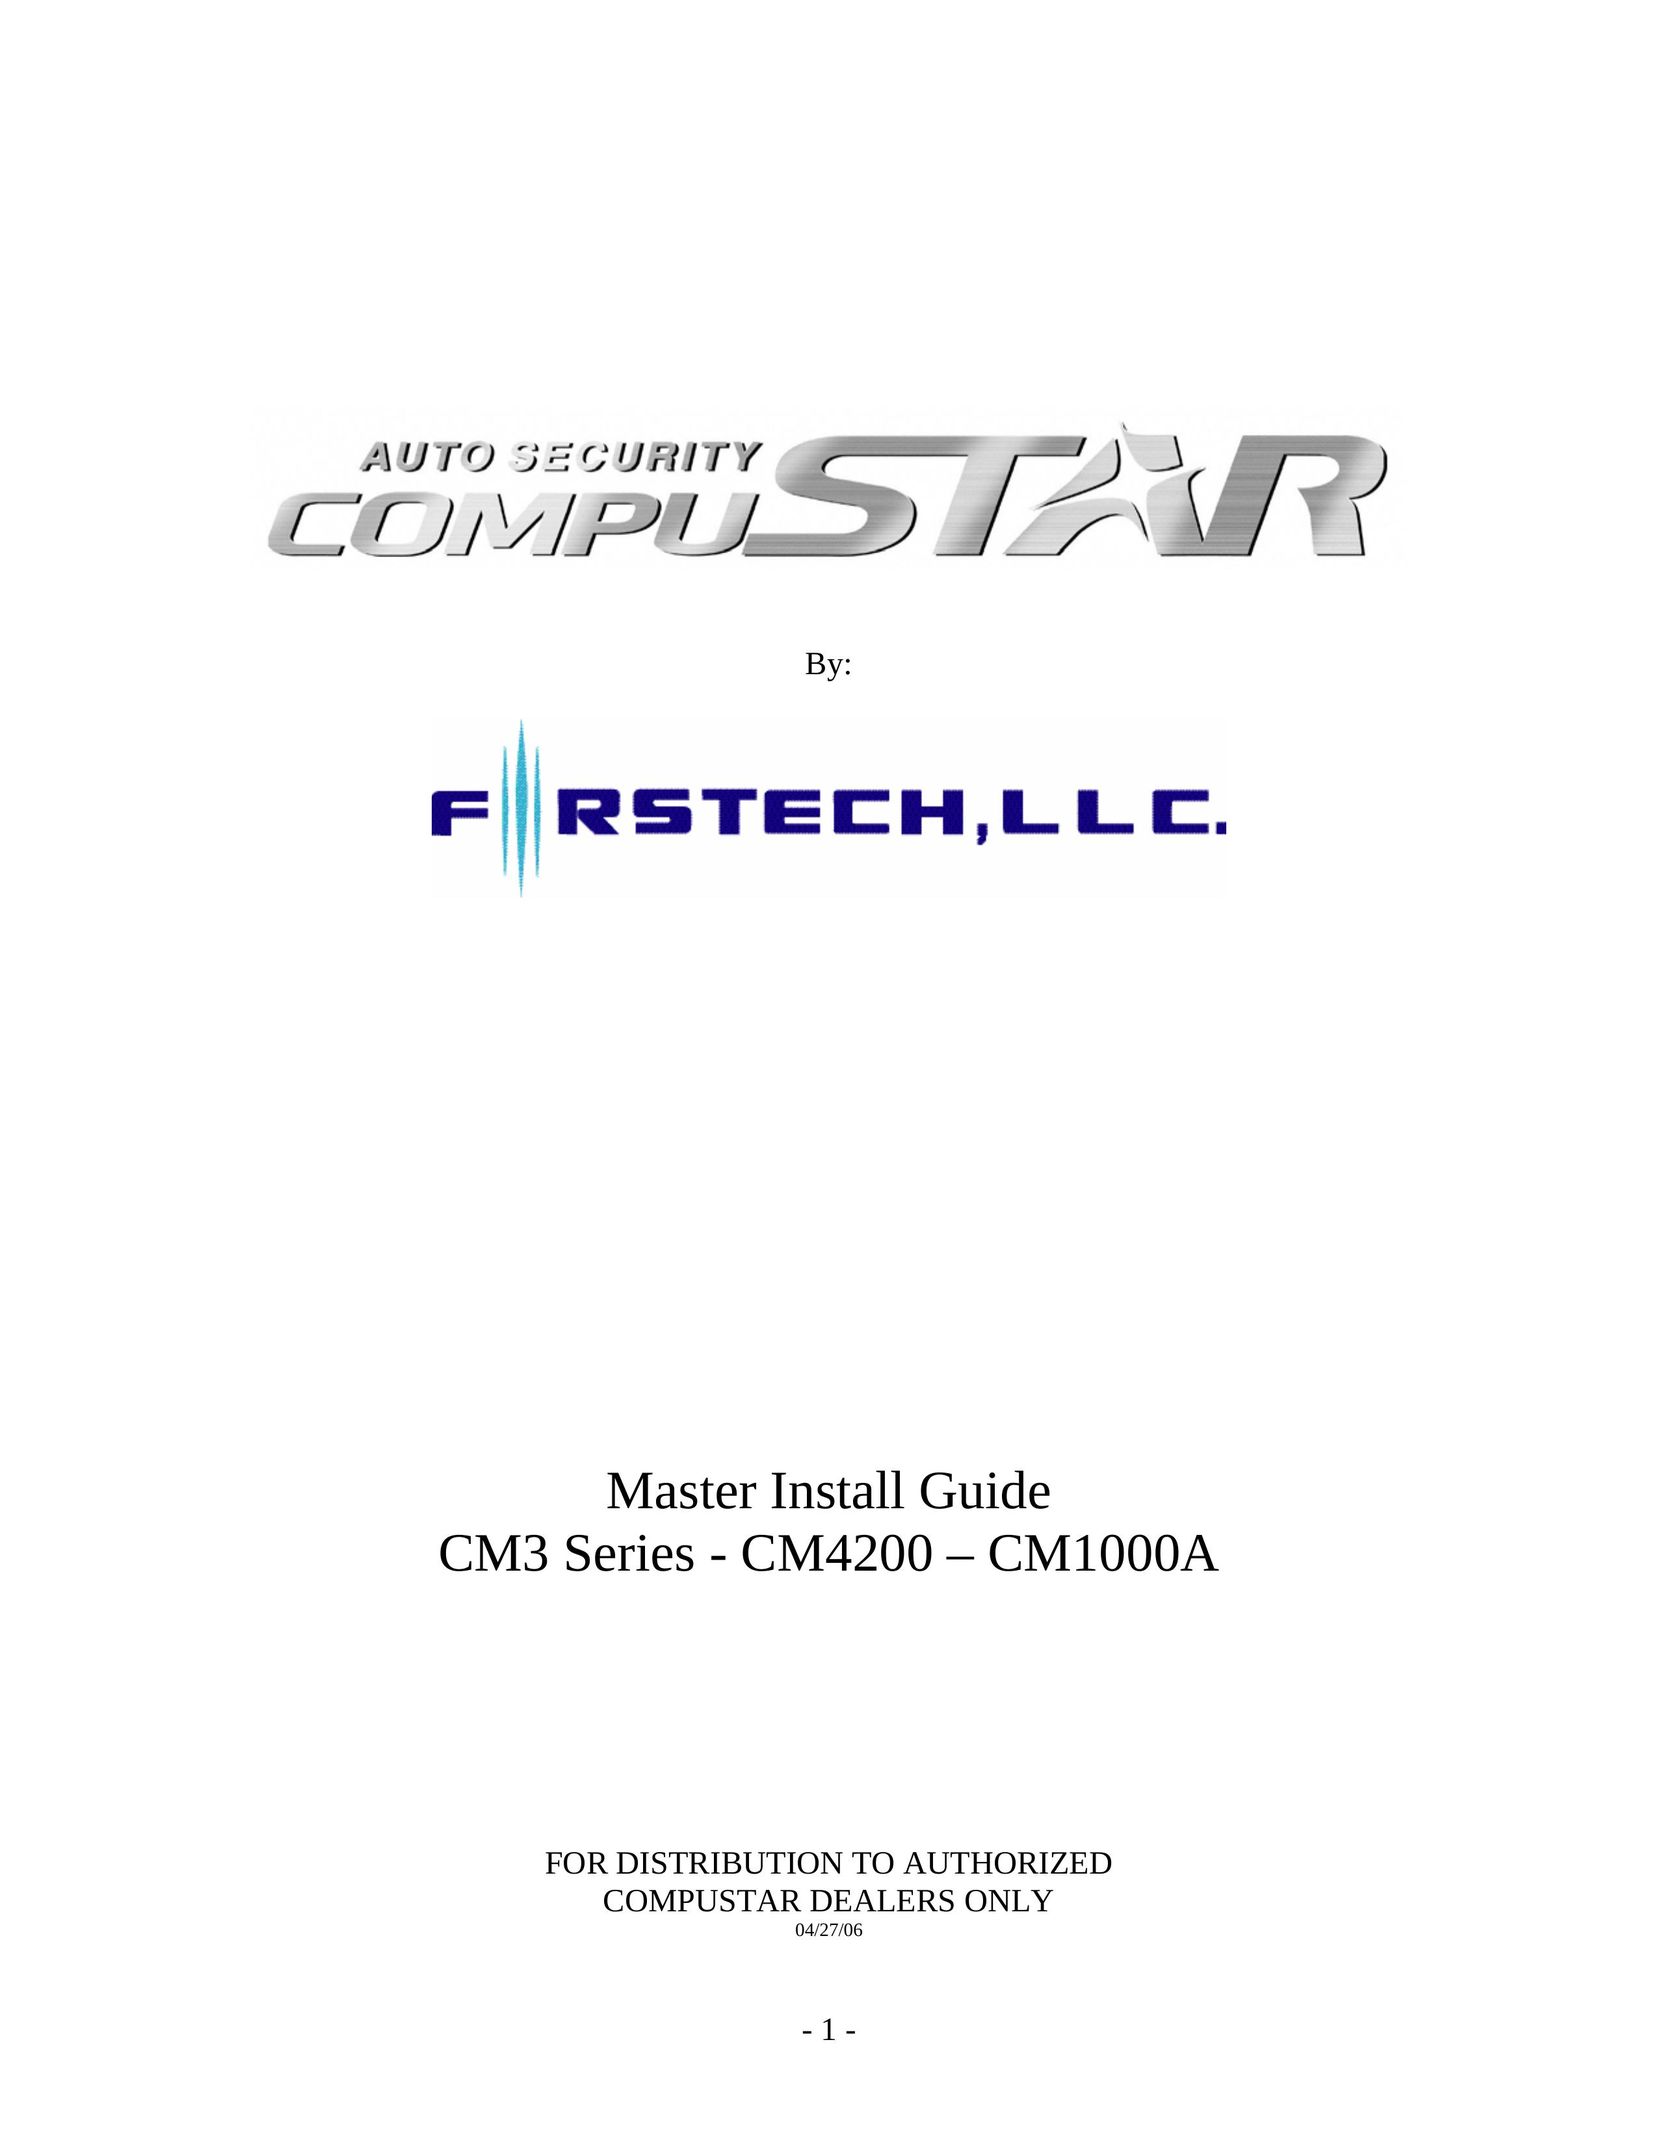 Firstech, LLC. CM3 SERIES Flat Panel Television User Manual